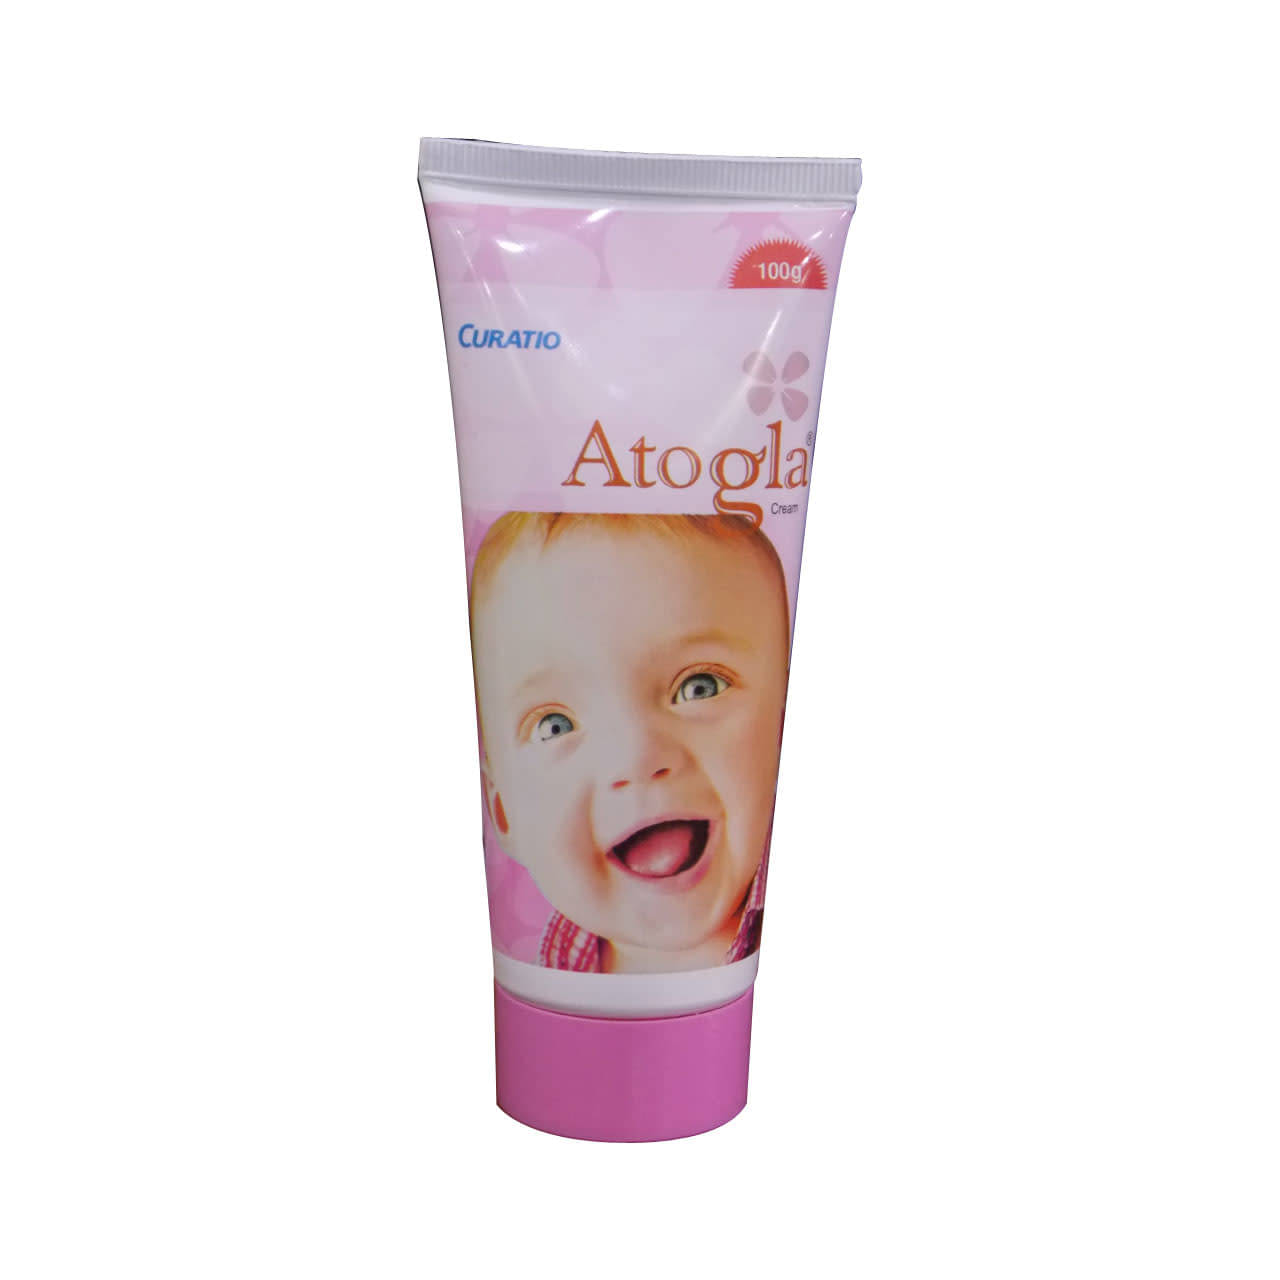 atogla baby products